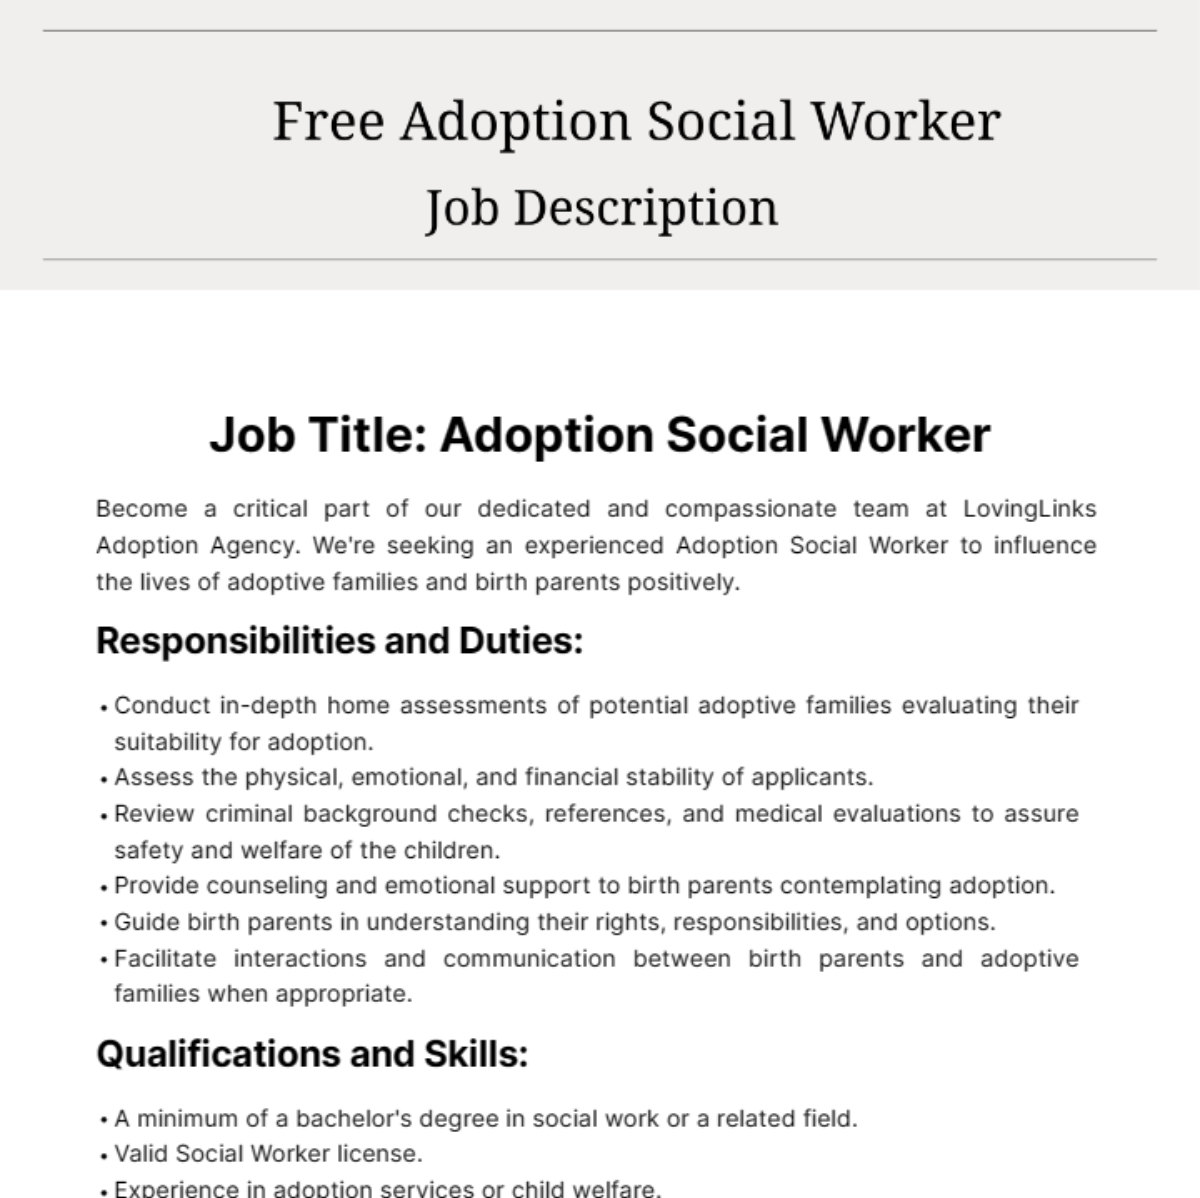 Free Adoption Social Worker Job Description Template